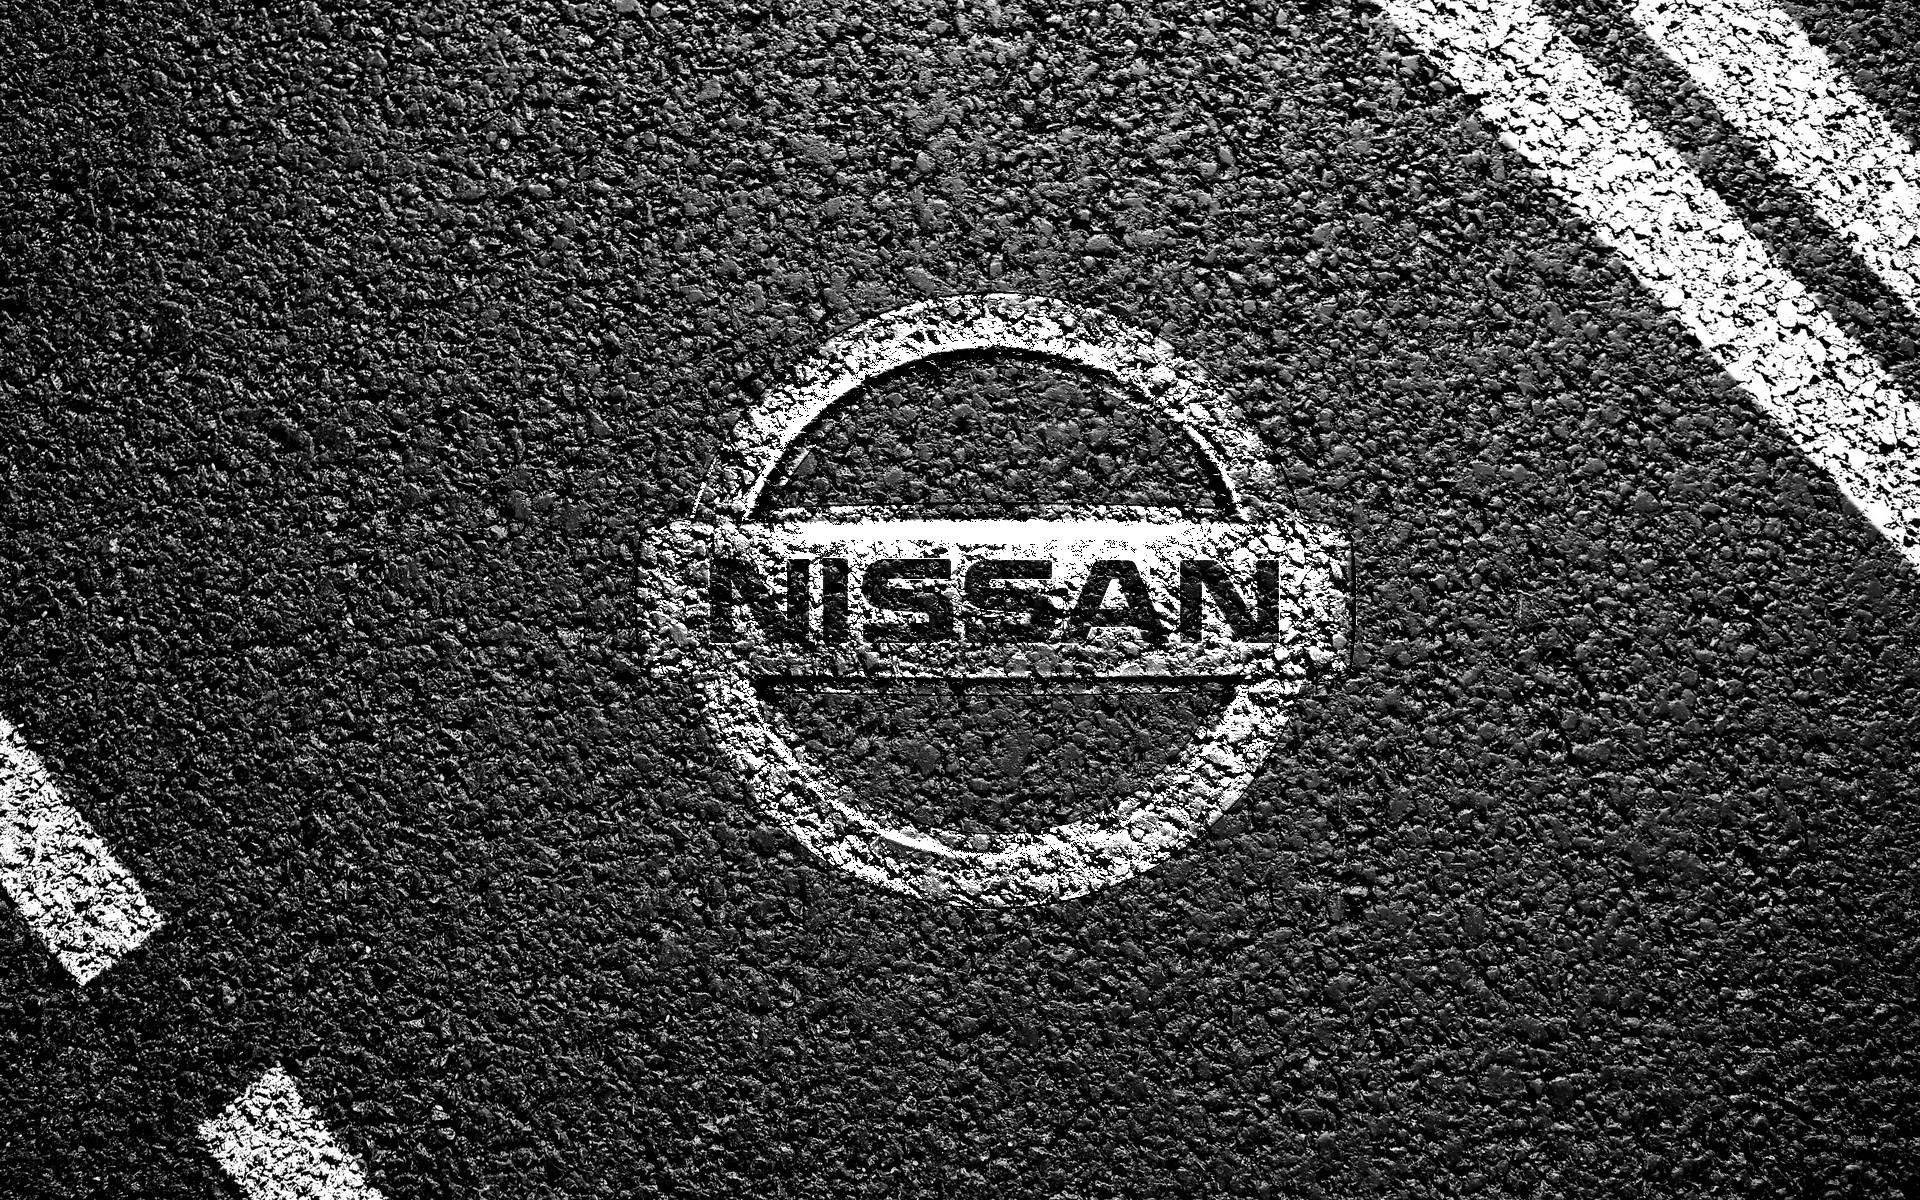 nissan logo iphone wallpaper